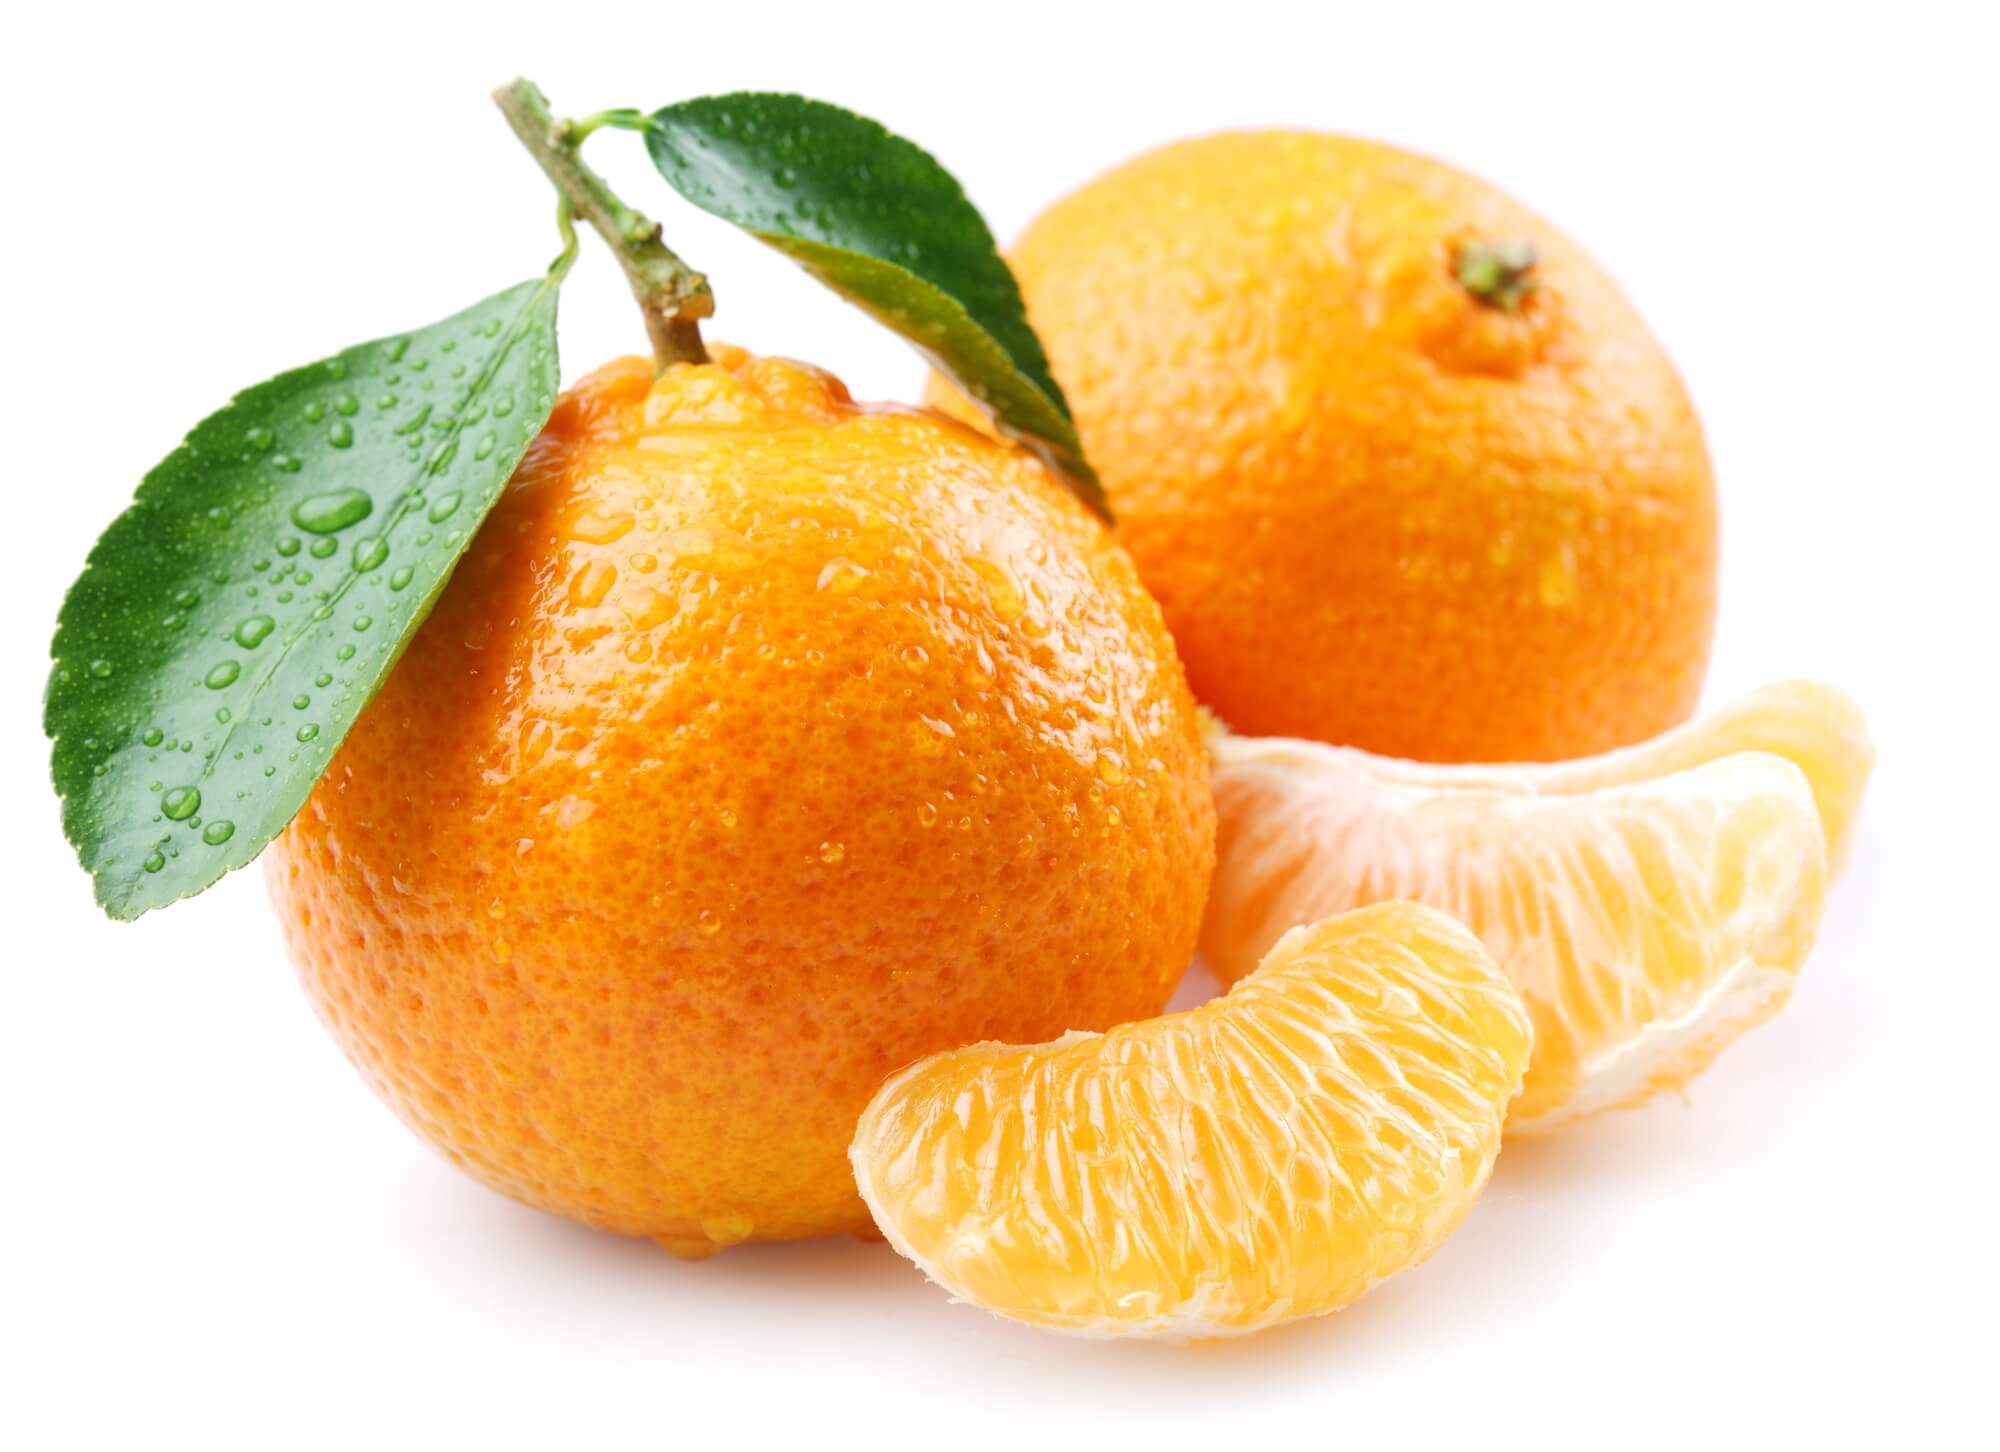 Health benefits of eating oranges